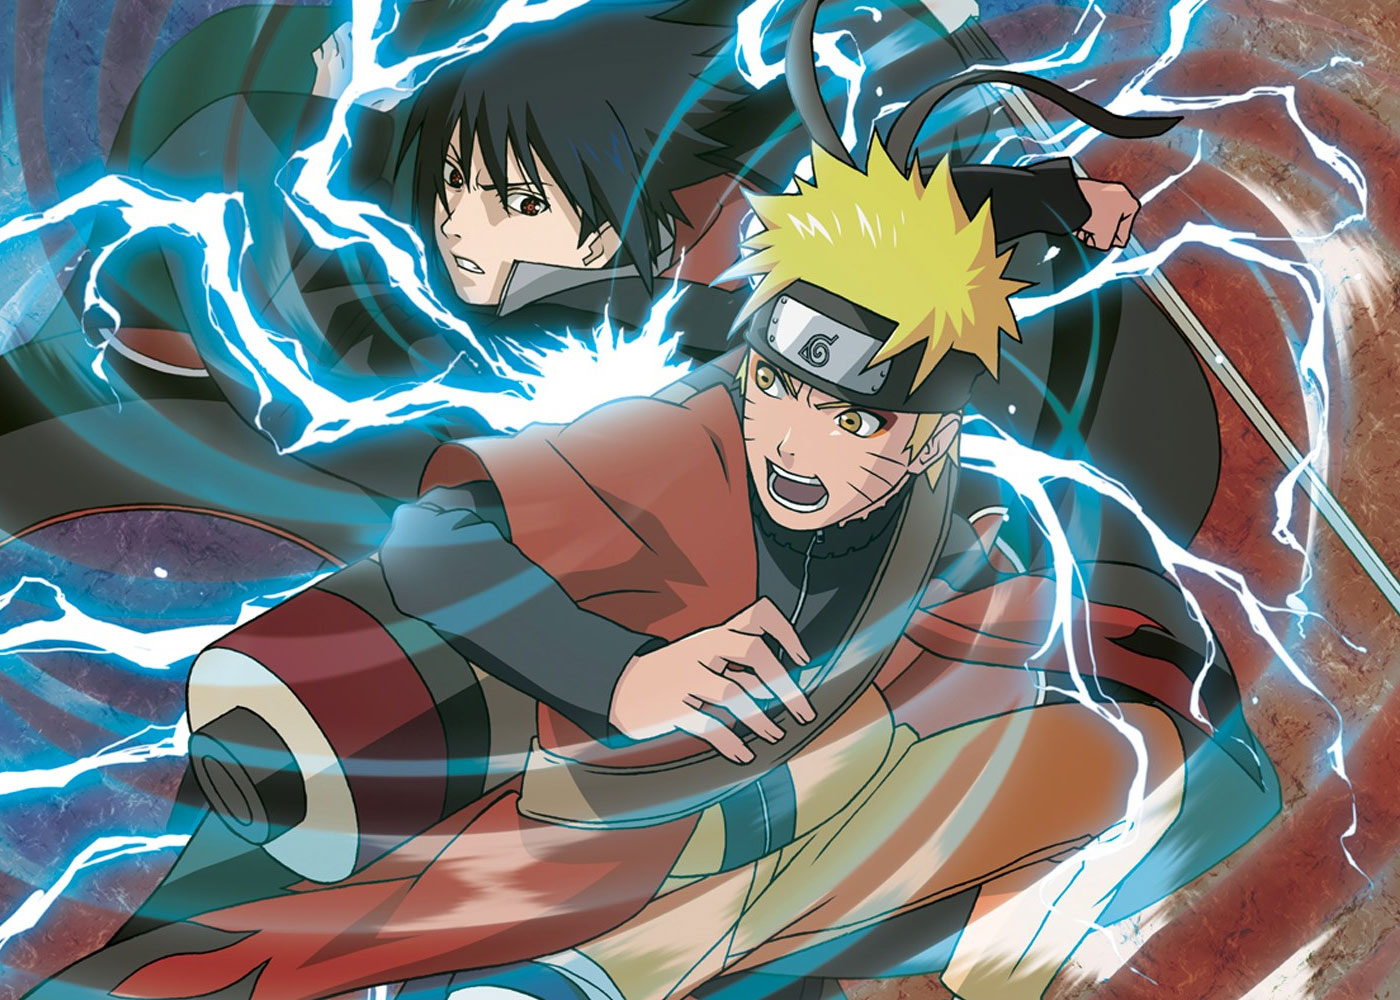 10 Storyline "Gantung" di Cerita Naruto - Greenscene